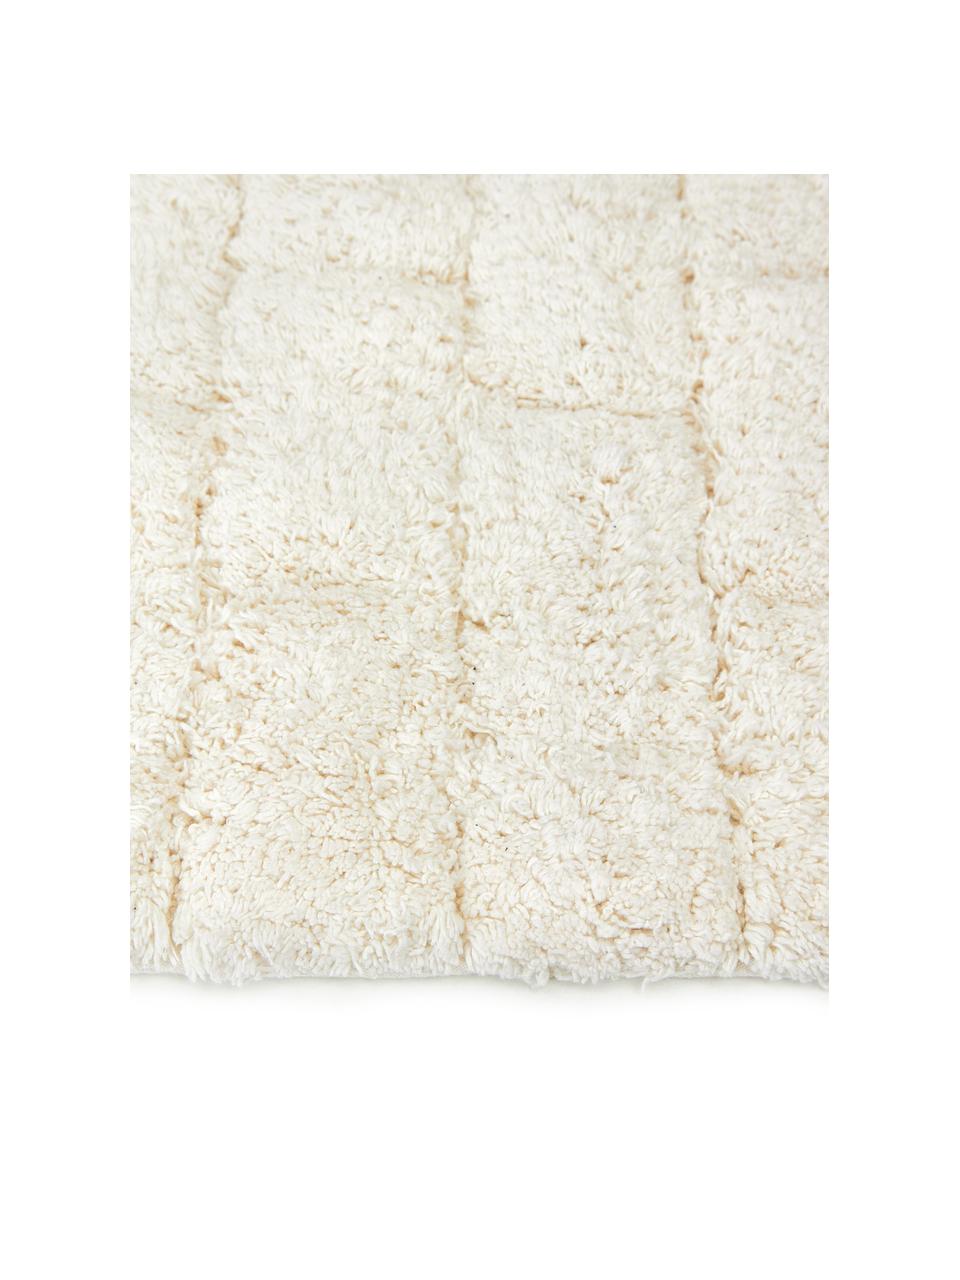 Alfombrilla de baño esponjosa Metro, 100% algodón
Gramaje superior 1900 g/m², Blanco crema, An 50 x L 60 cm